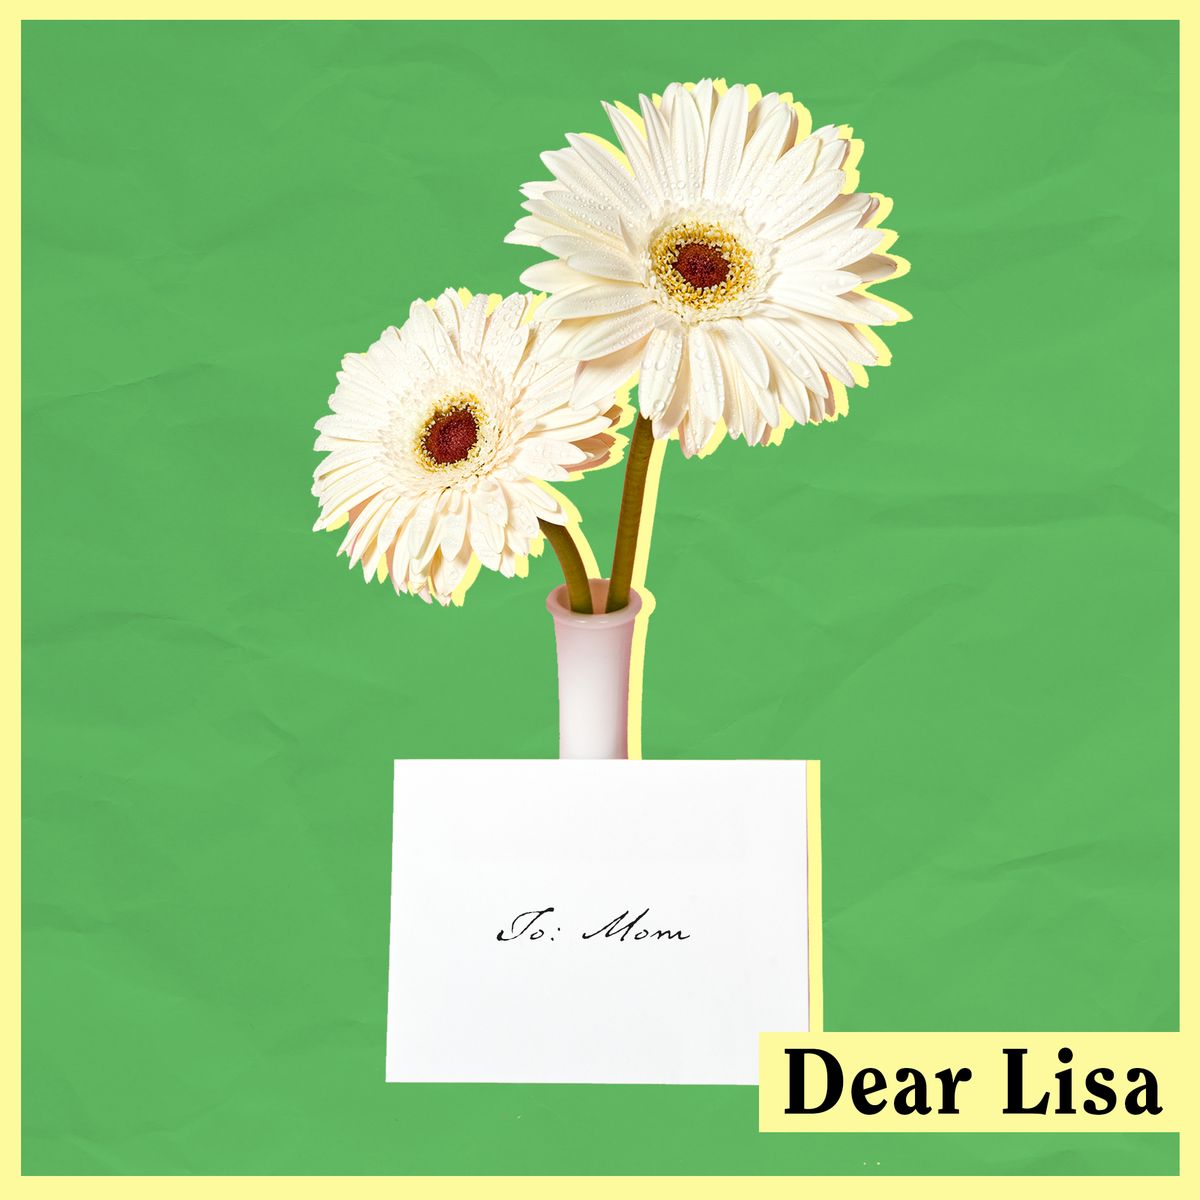 Gerbera, Flower, Plant, Cut flowers, Greeting card, Flowering plant, Daisy, Sunflower, Daisy family, barberton daisy, 